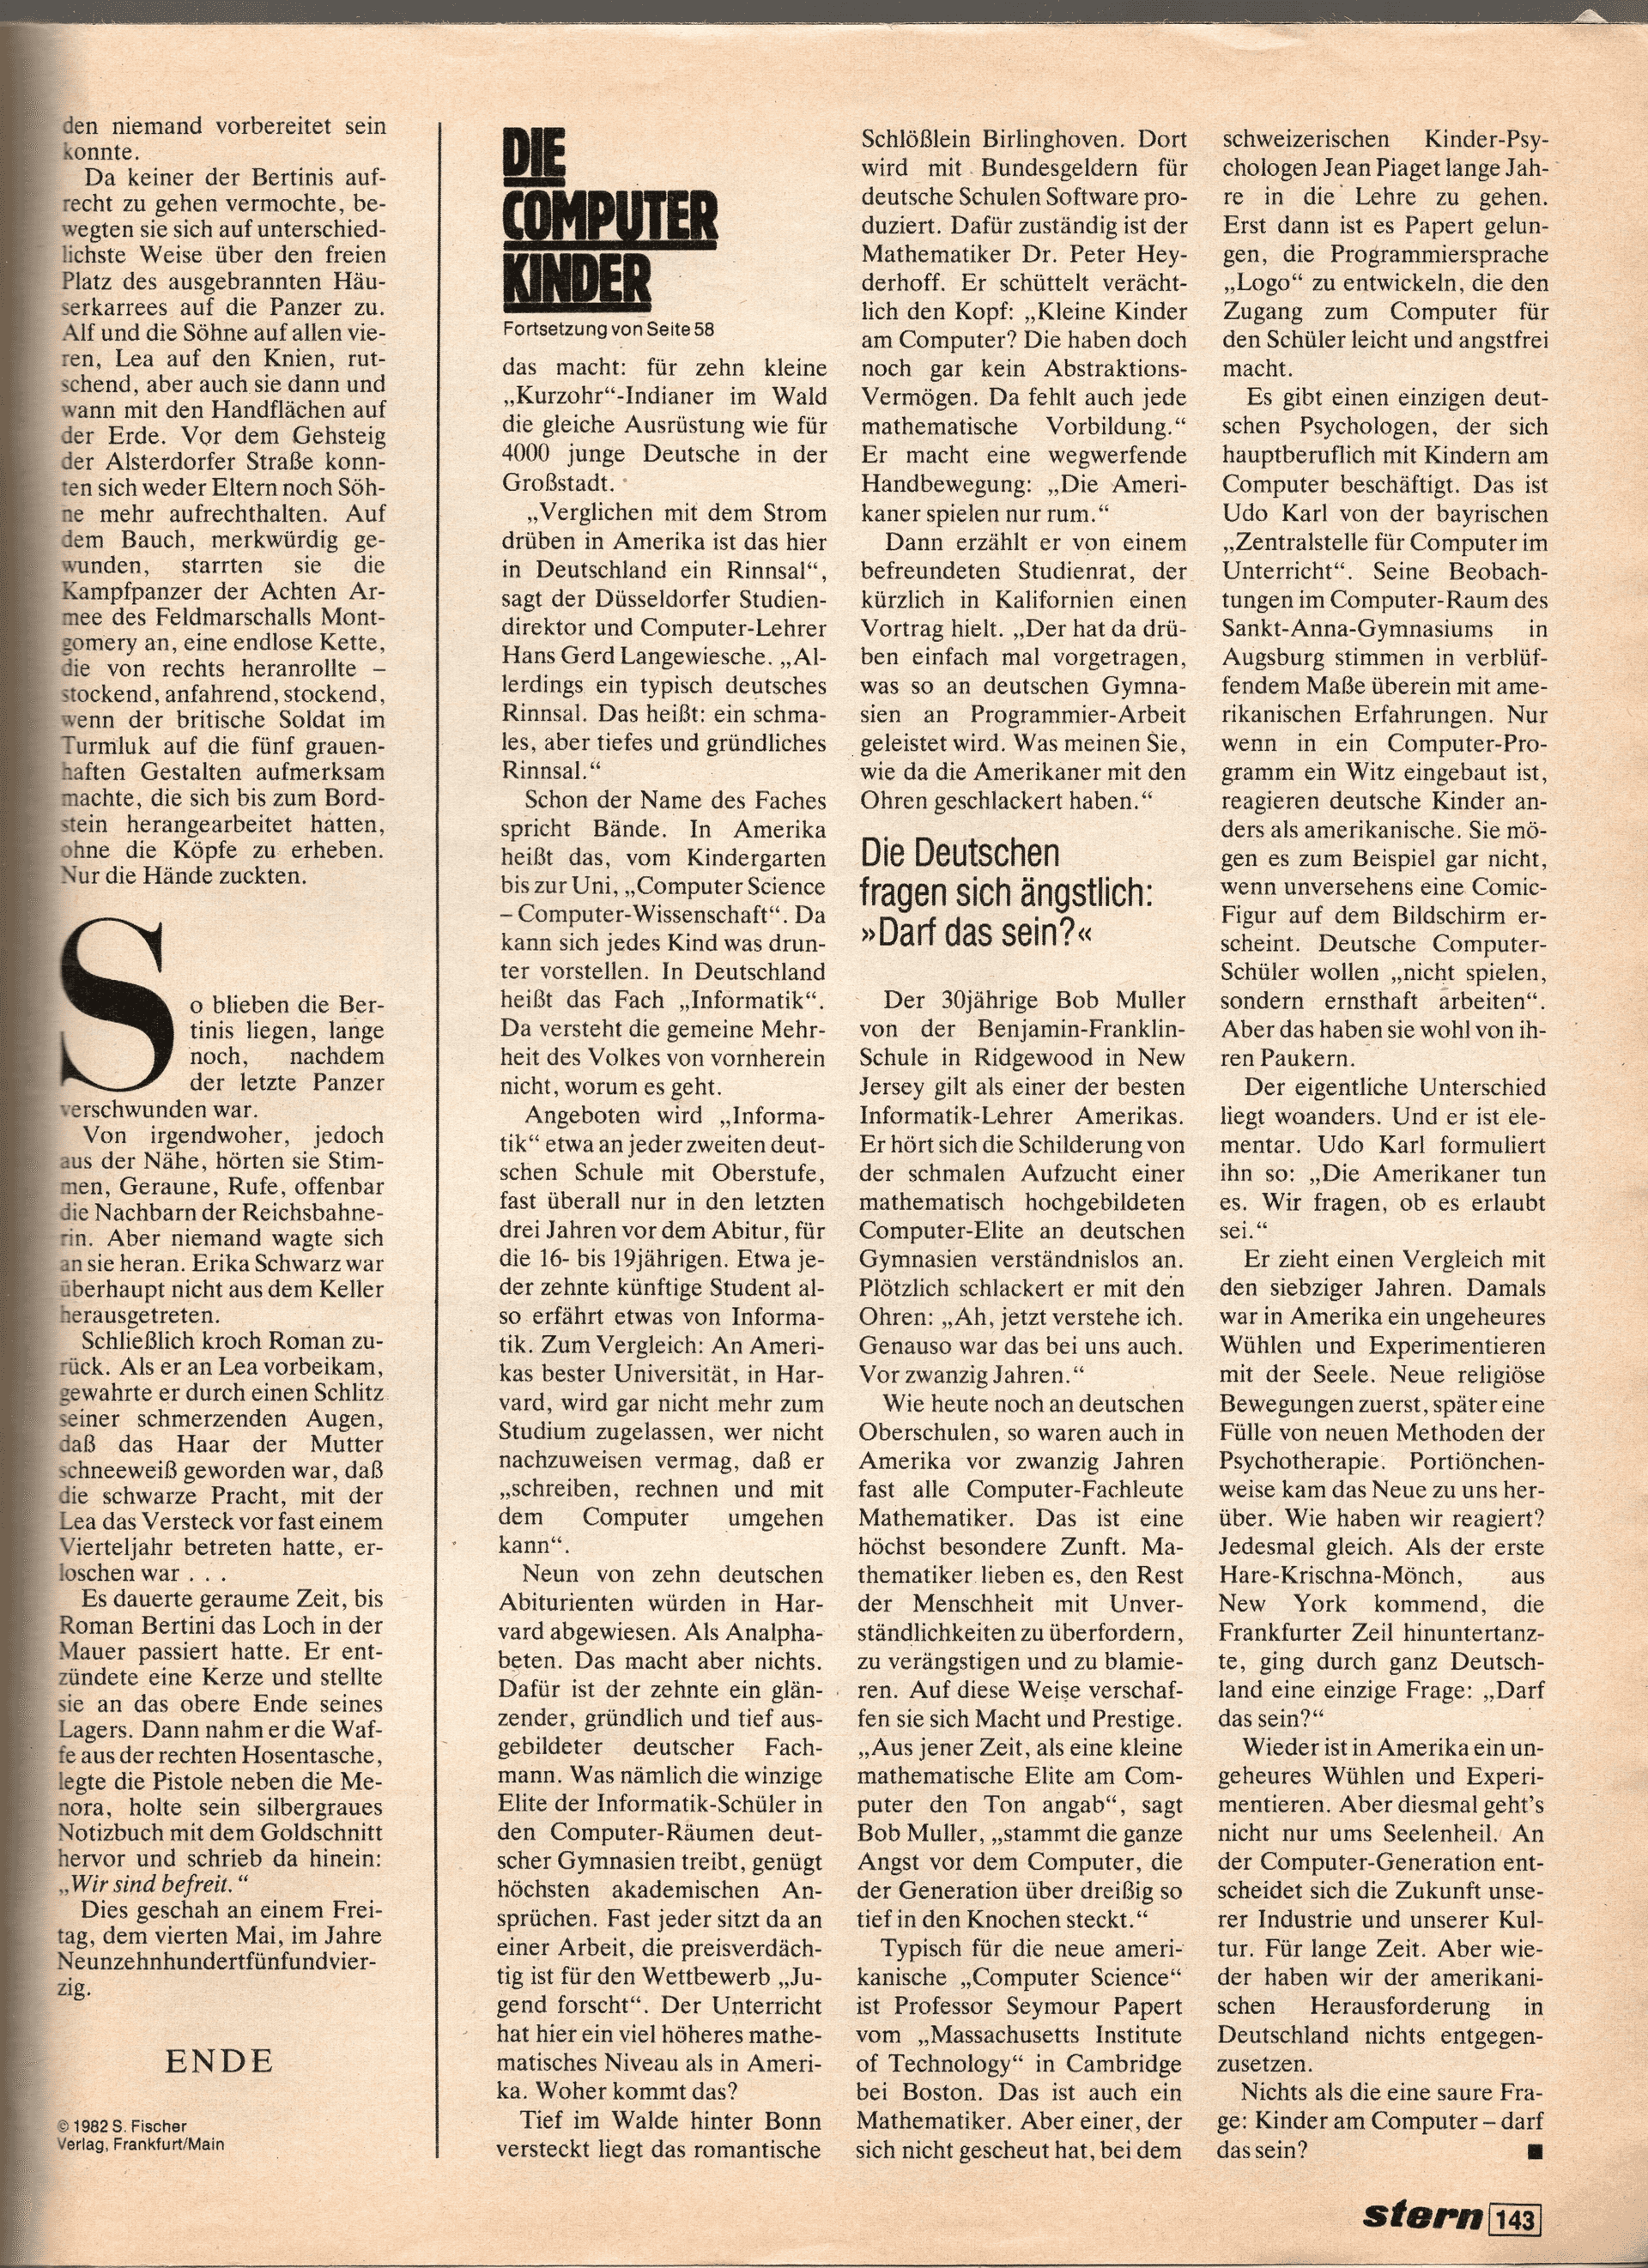 Stern - 12 August 1982 - p143